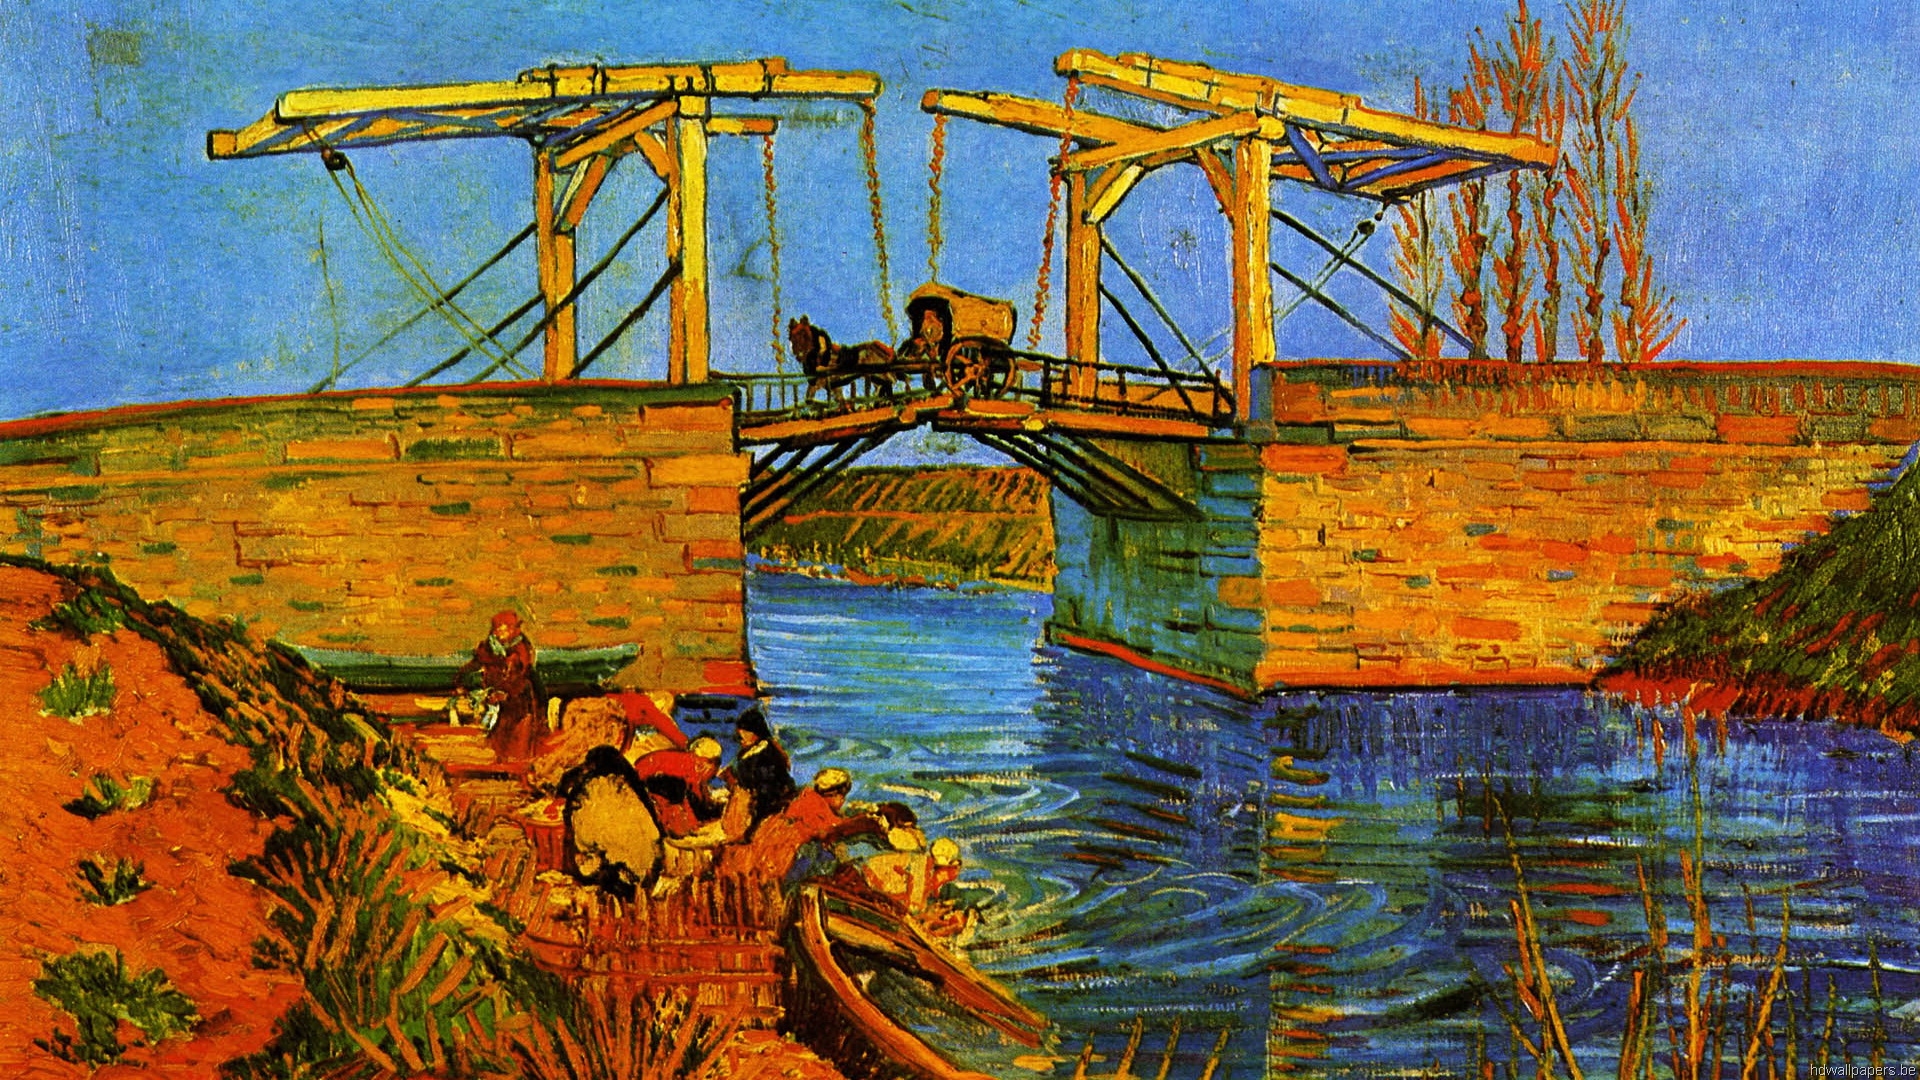 [76+] Vincent Van Gogh Wallpapers | WallpaperSafari.com